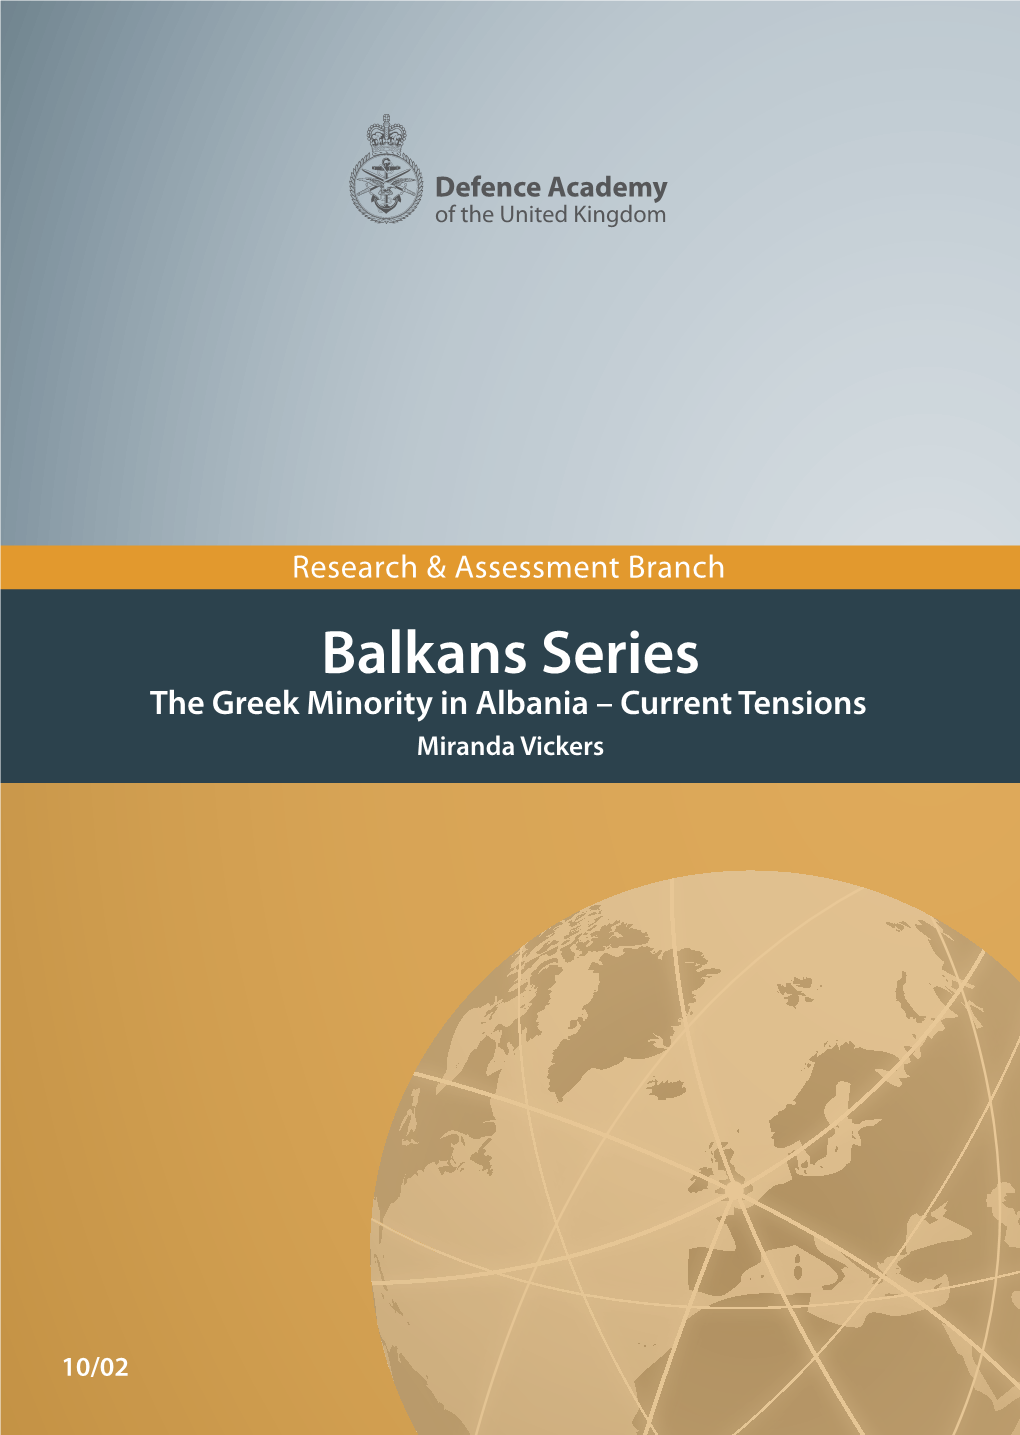 The Greek Minority in Albania – Current Tensions Miranda Vickers